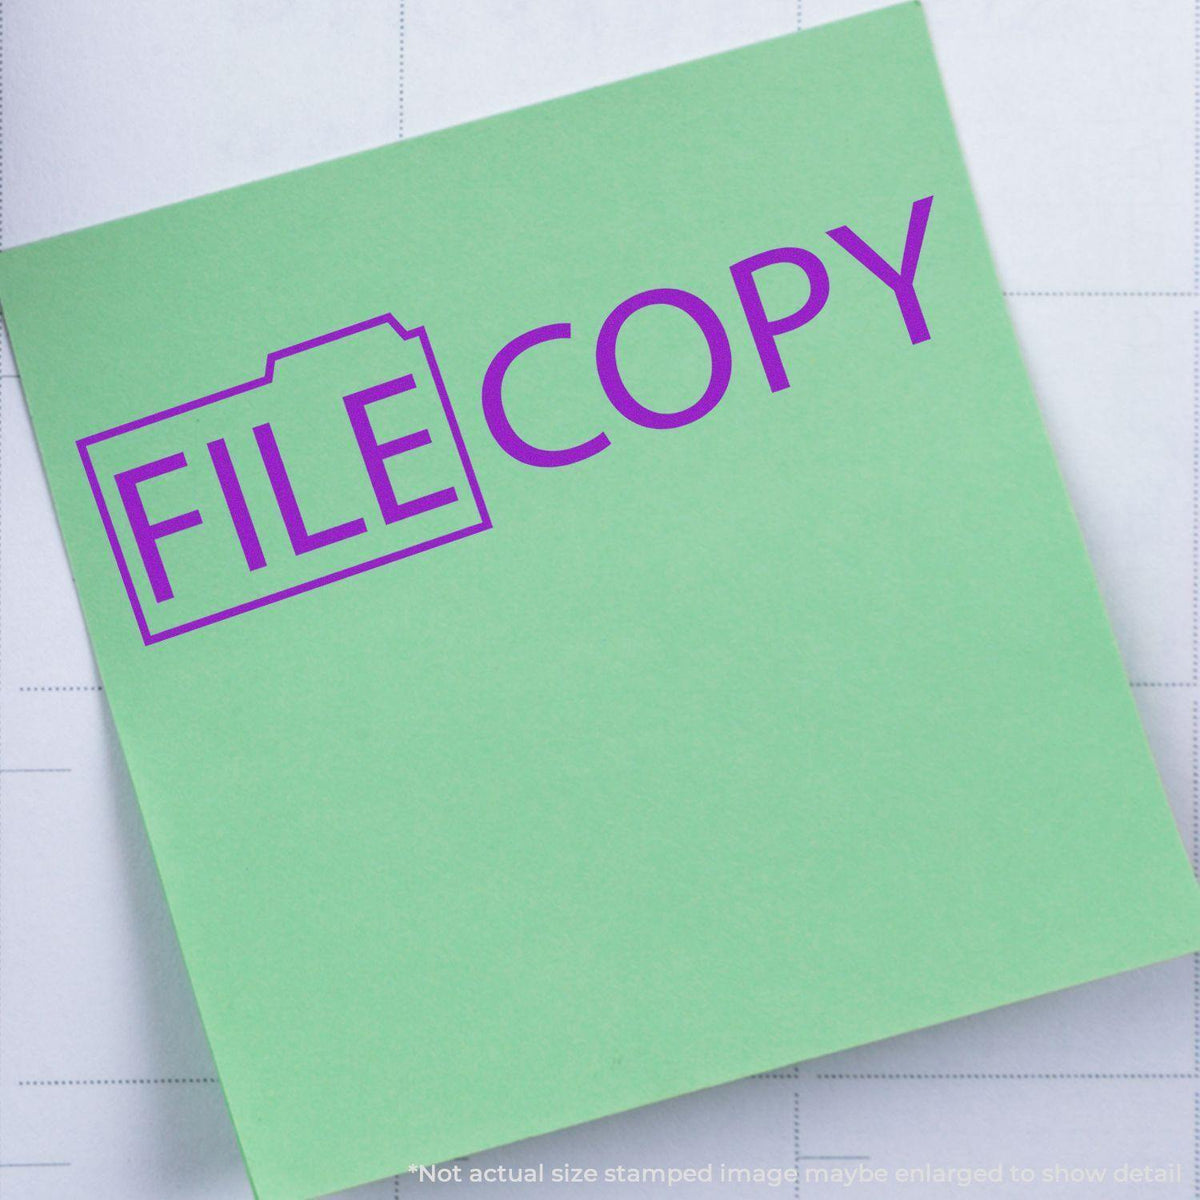 In Use Slim Pre-Inked File Copy with Folder Stamp Image